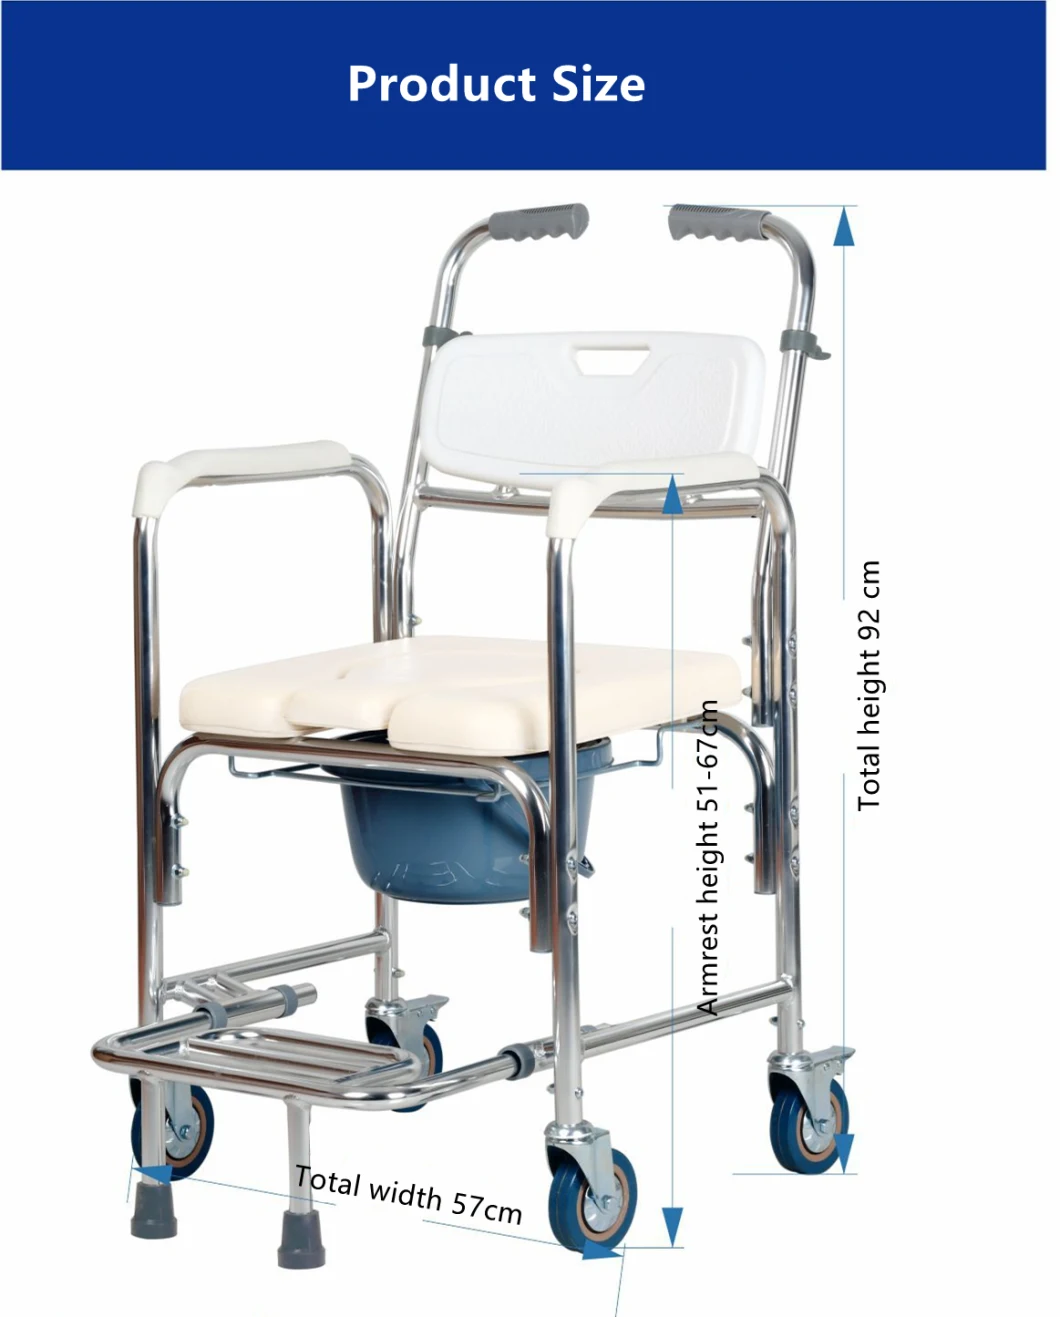 Disabled Aluminum Bath Silla Comoda Commode Wheelchair Chair with Wheels